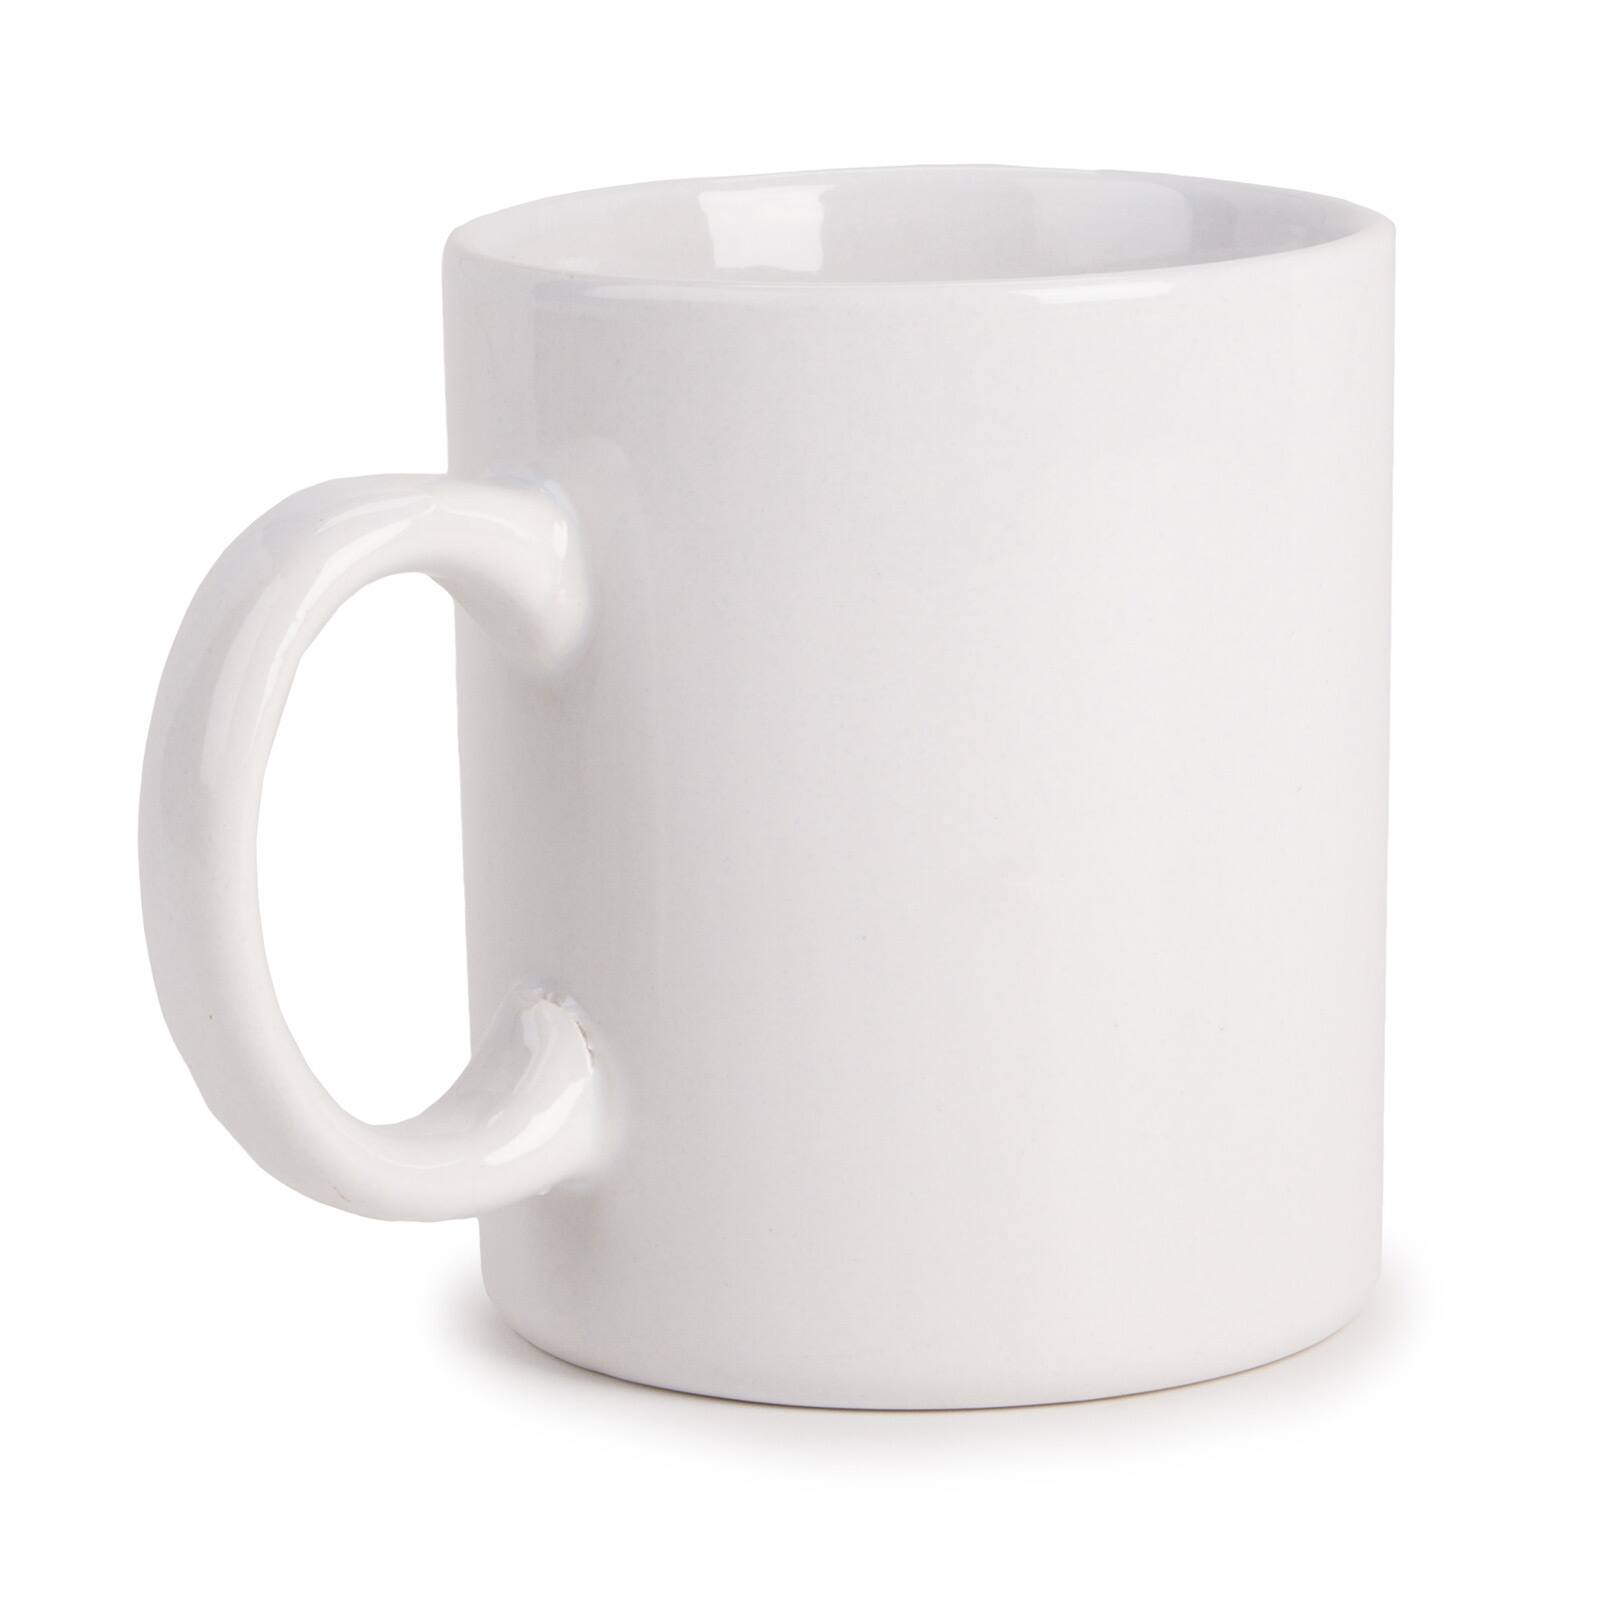 white coffee mugs with black writing